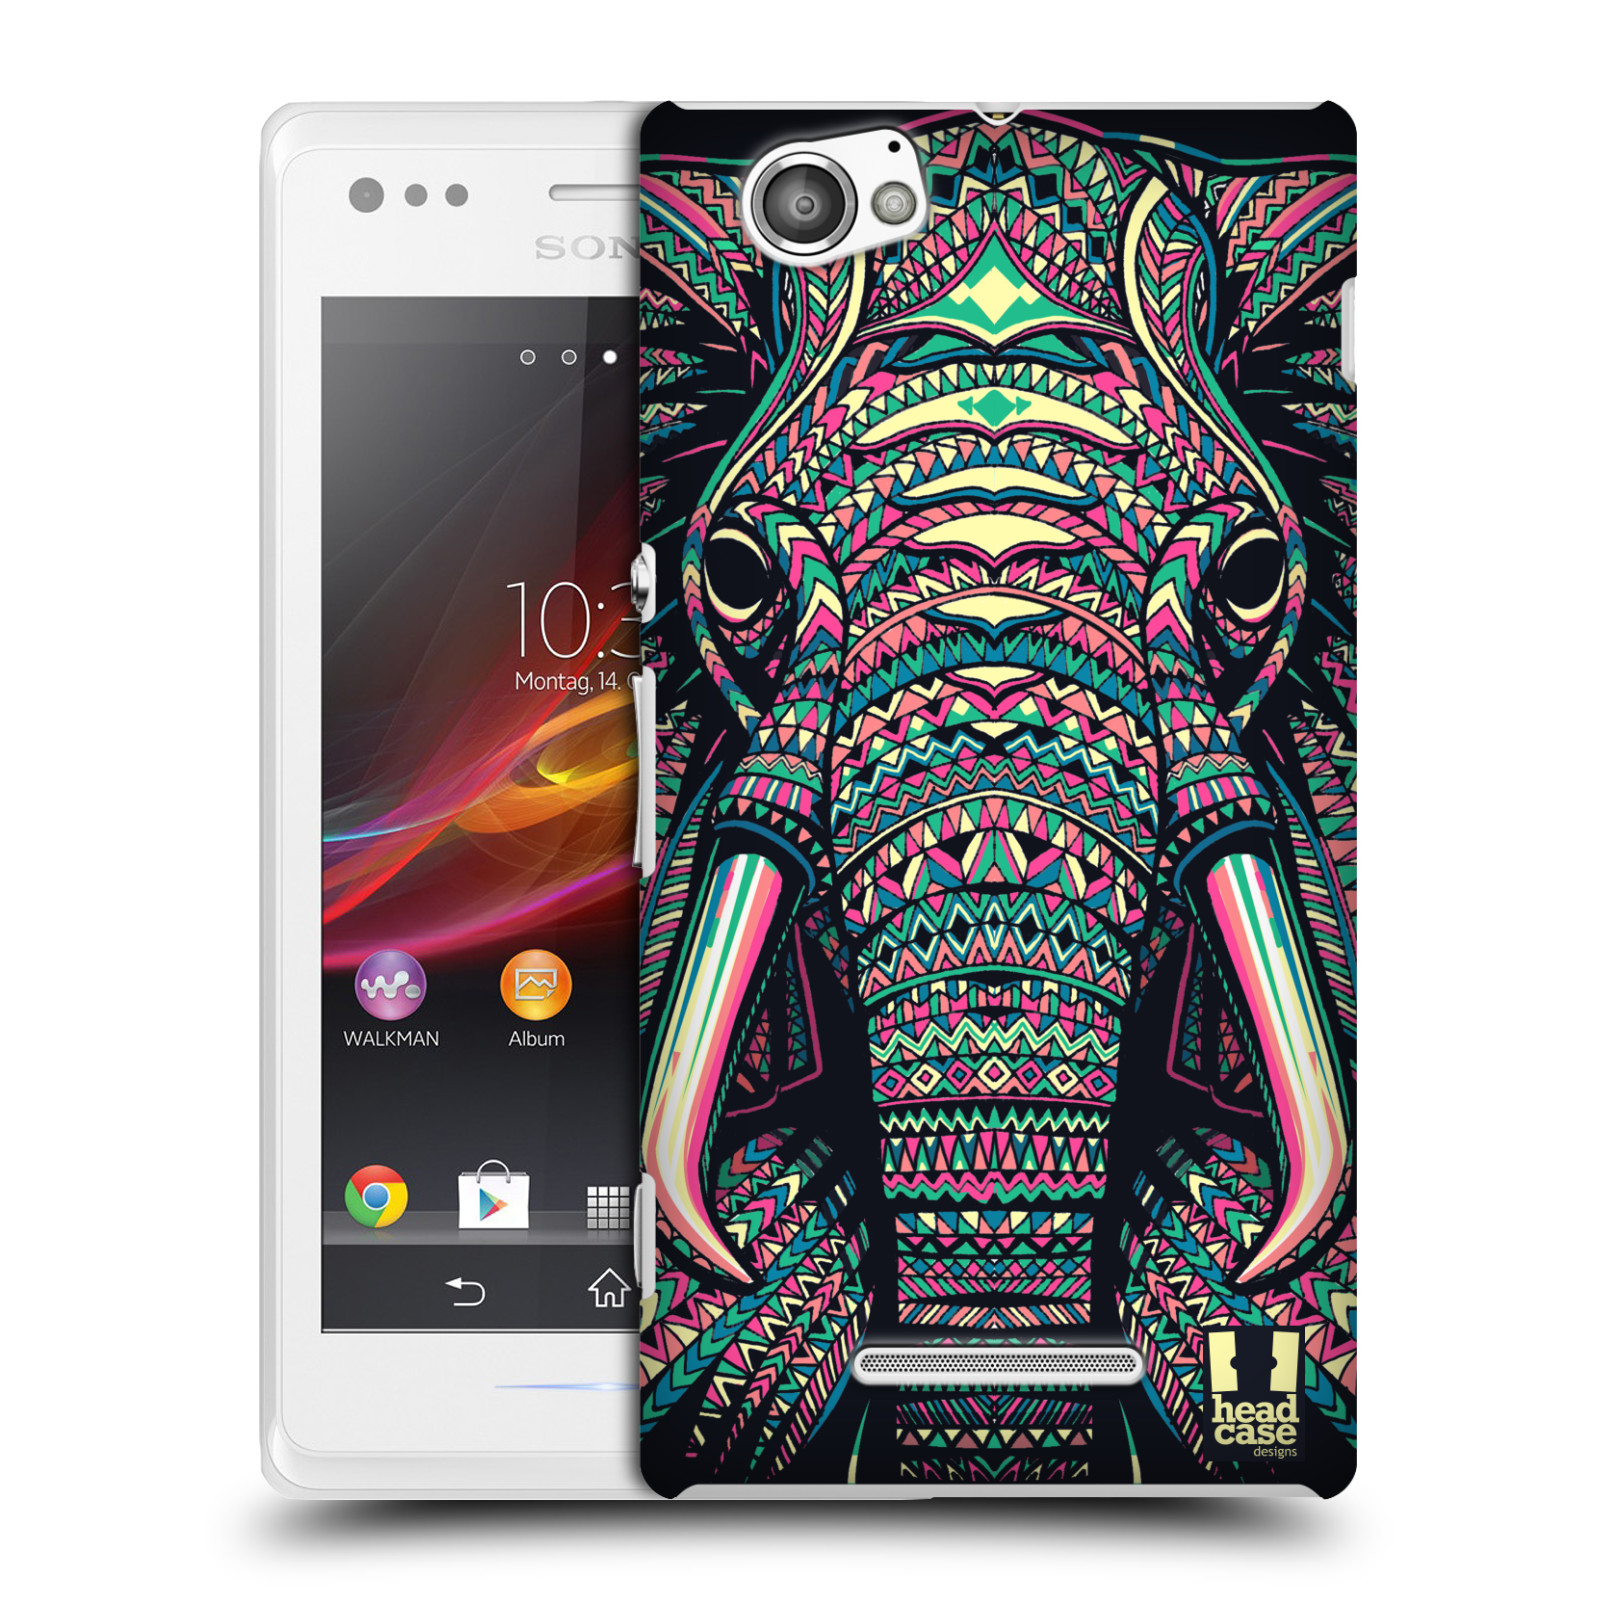 HEAD CASE plastový obal na mobil Sony Xperia M vzor Aztécký motiv zvíře 2 slon